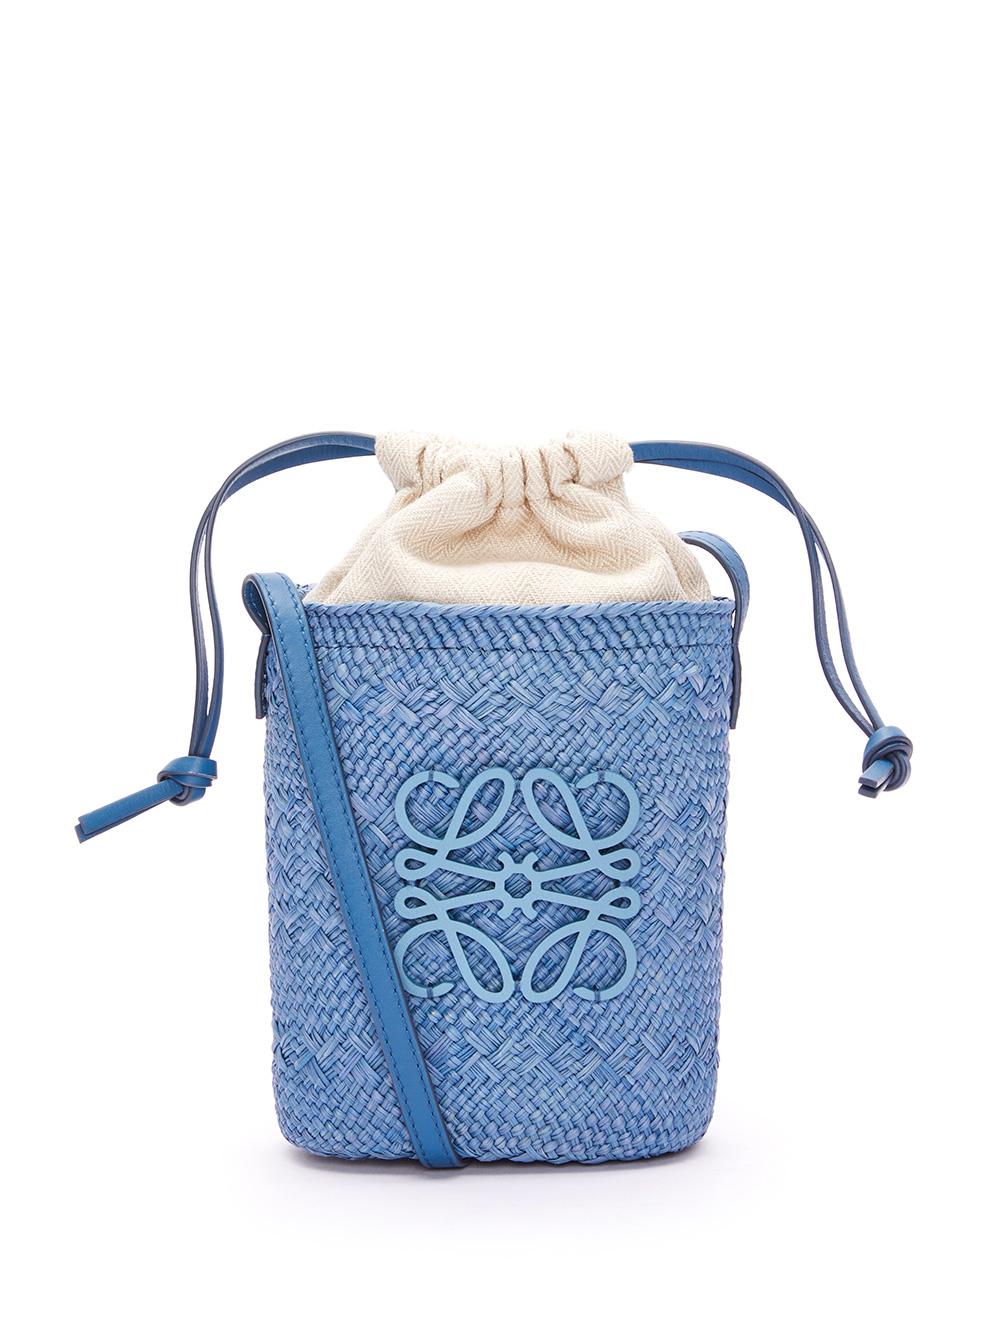 Paulas Ibiza Anagram Woven Bucket Bag in Blue - Loewe